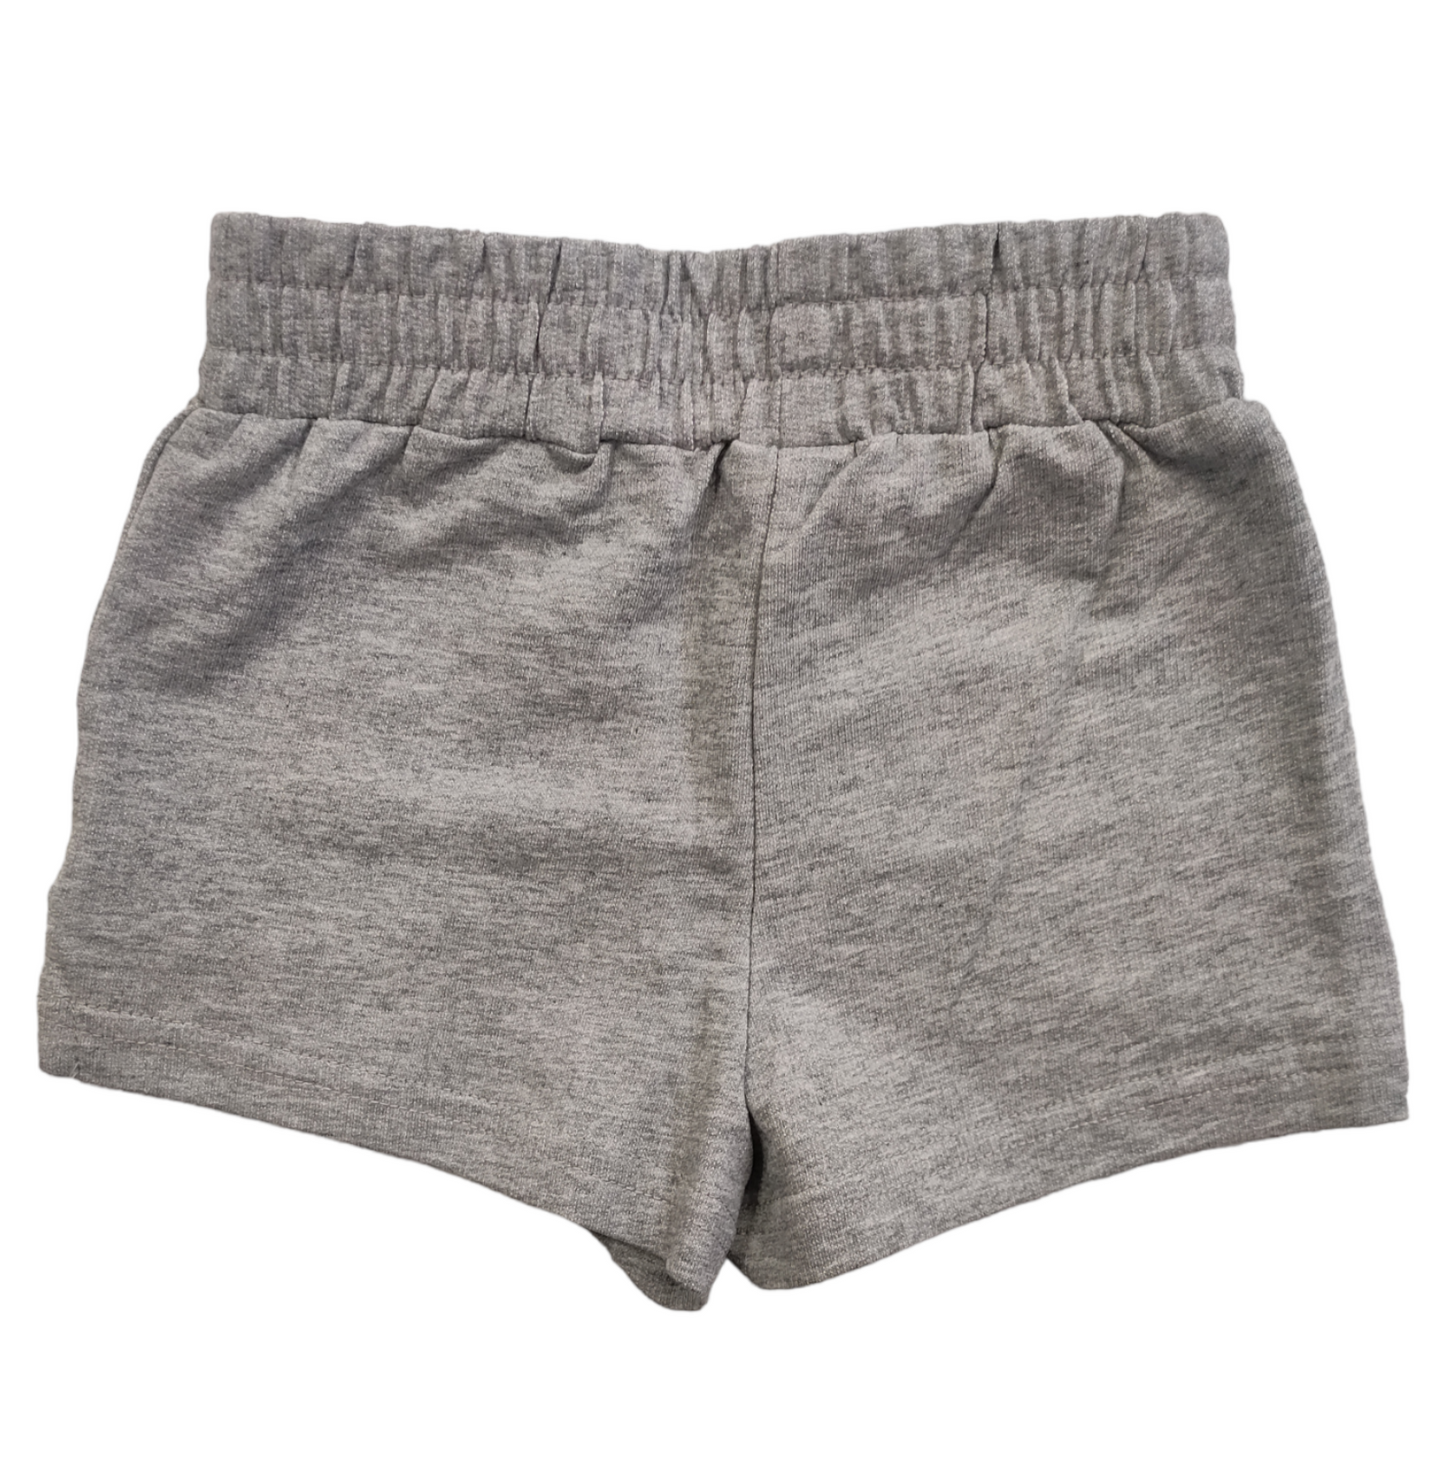 Pantaloncino Grigio Modello Shorts Sportware in Jersey di Cotone Bambina Bambino Unisex 6-36 Mesi